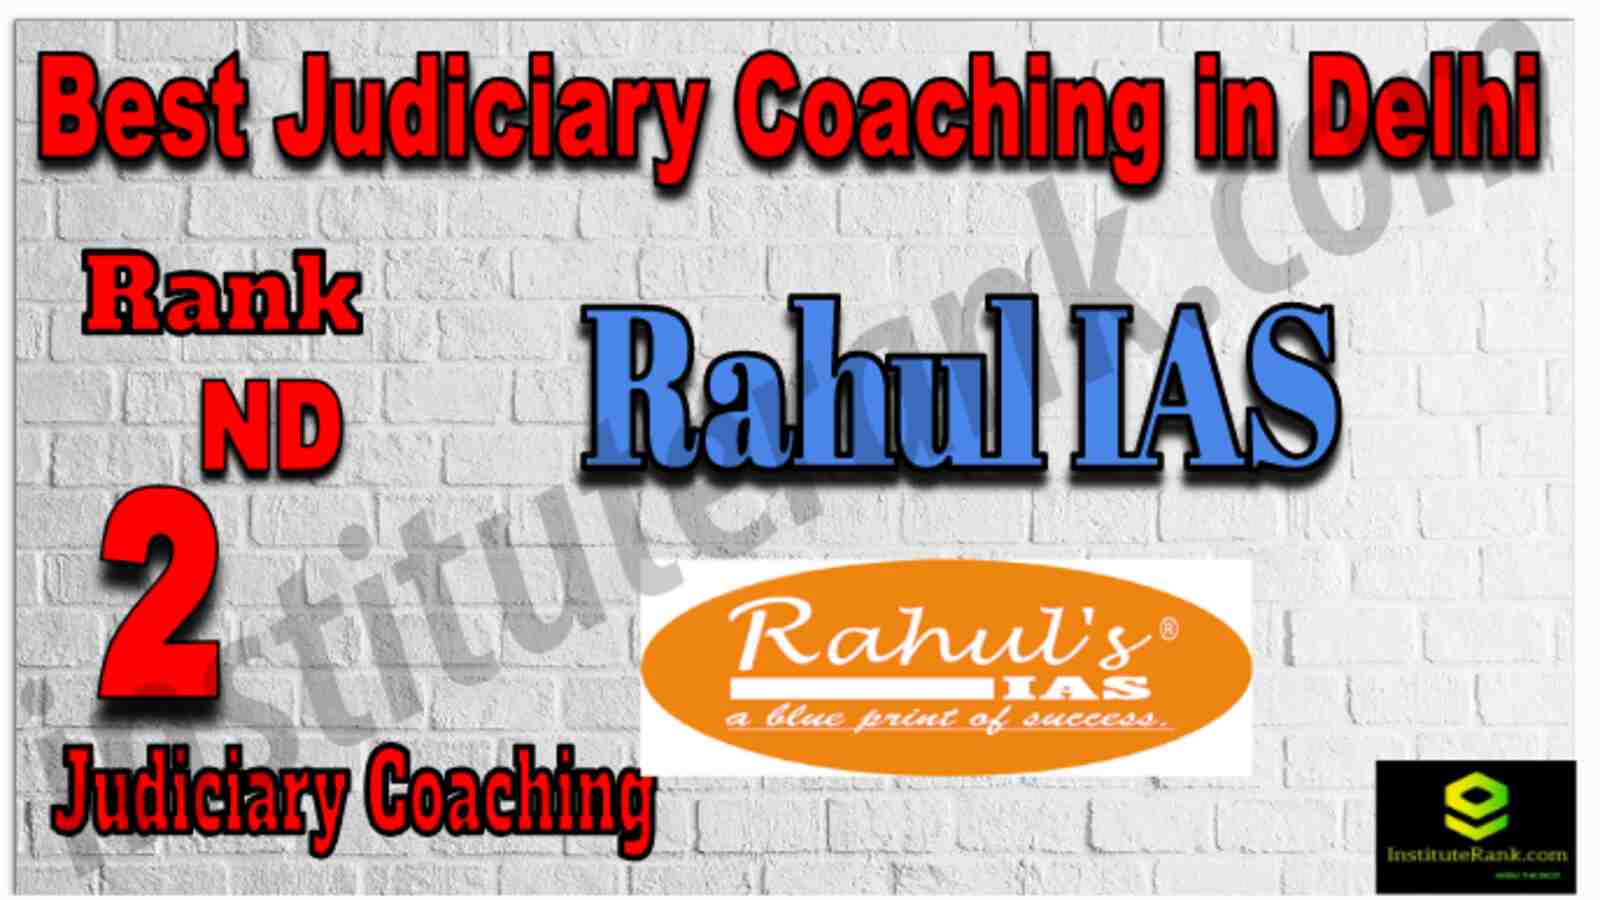 Rahul IAS Best Judiciary Coaching Center in Delhi, Top Judiciary Coaching in Delhi, Rank 2 Judiciary Coaching in Delhi 